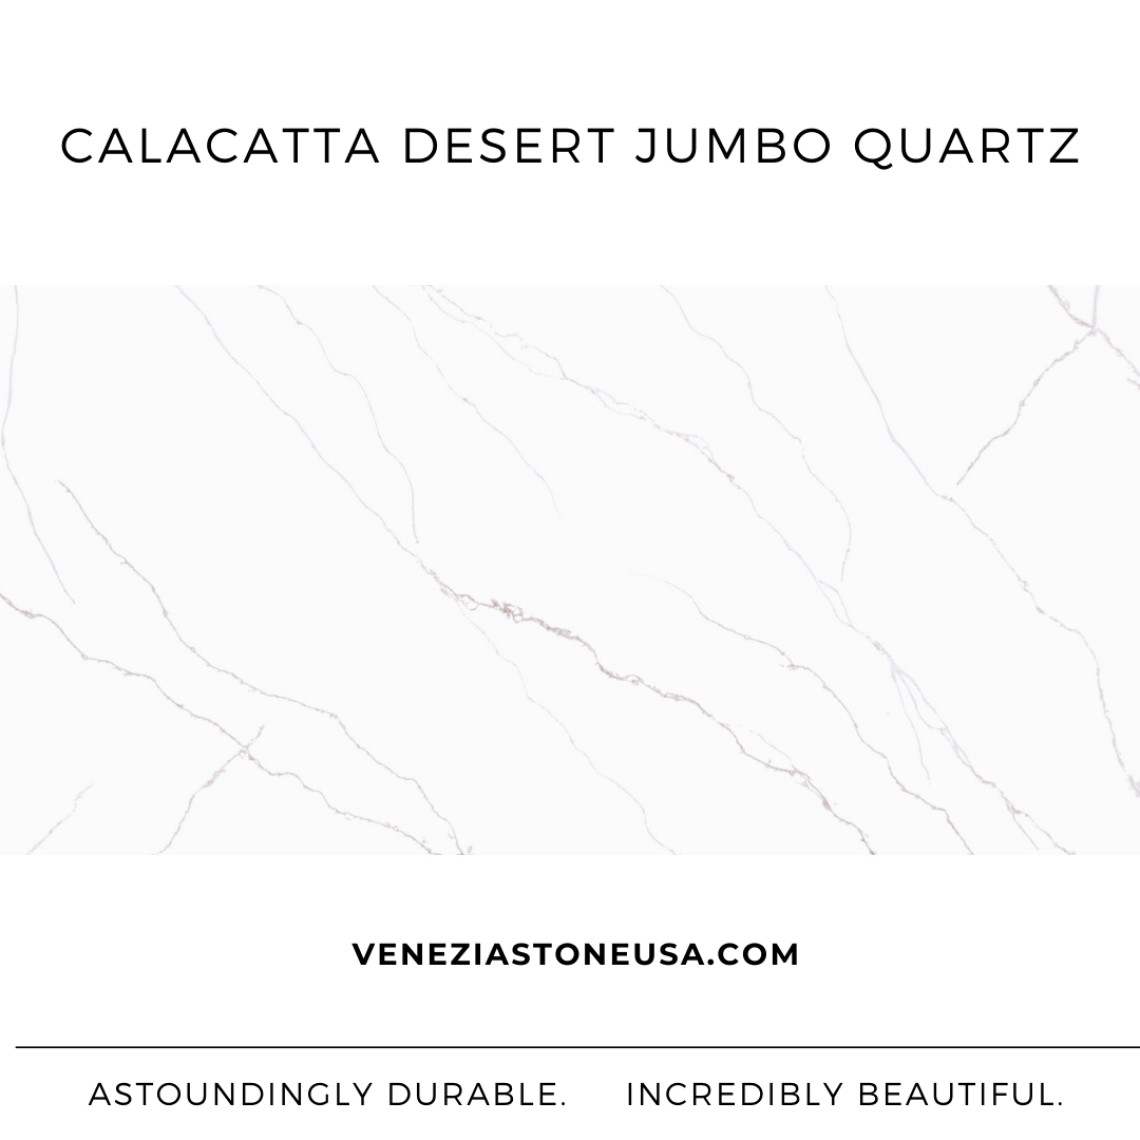 Calacatta Desert Jumbo Quartz